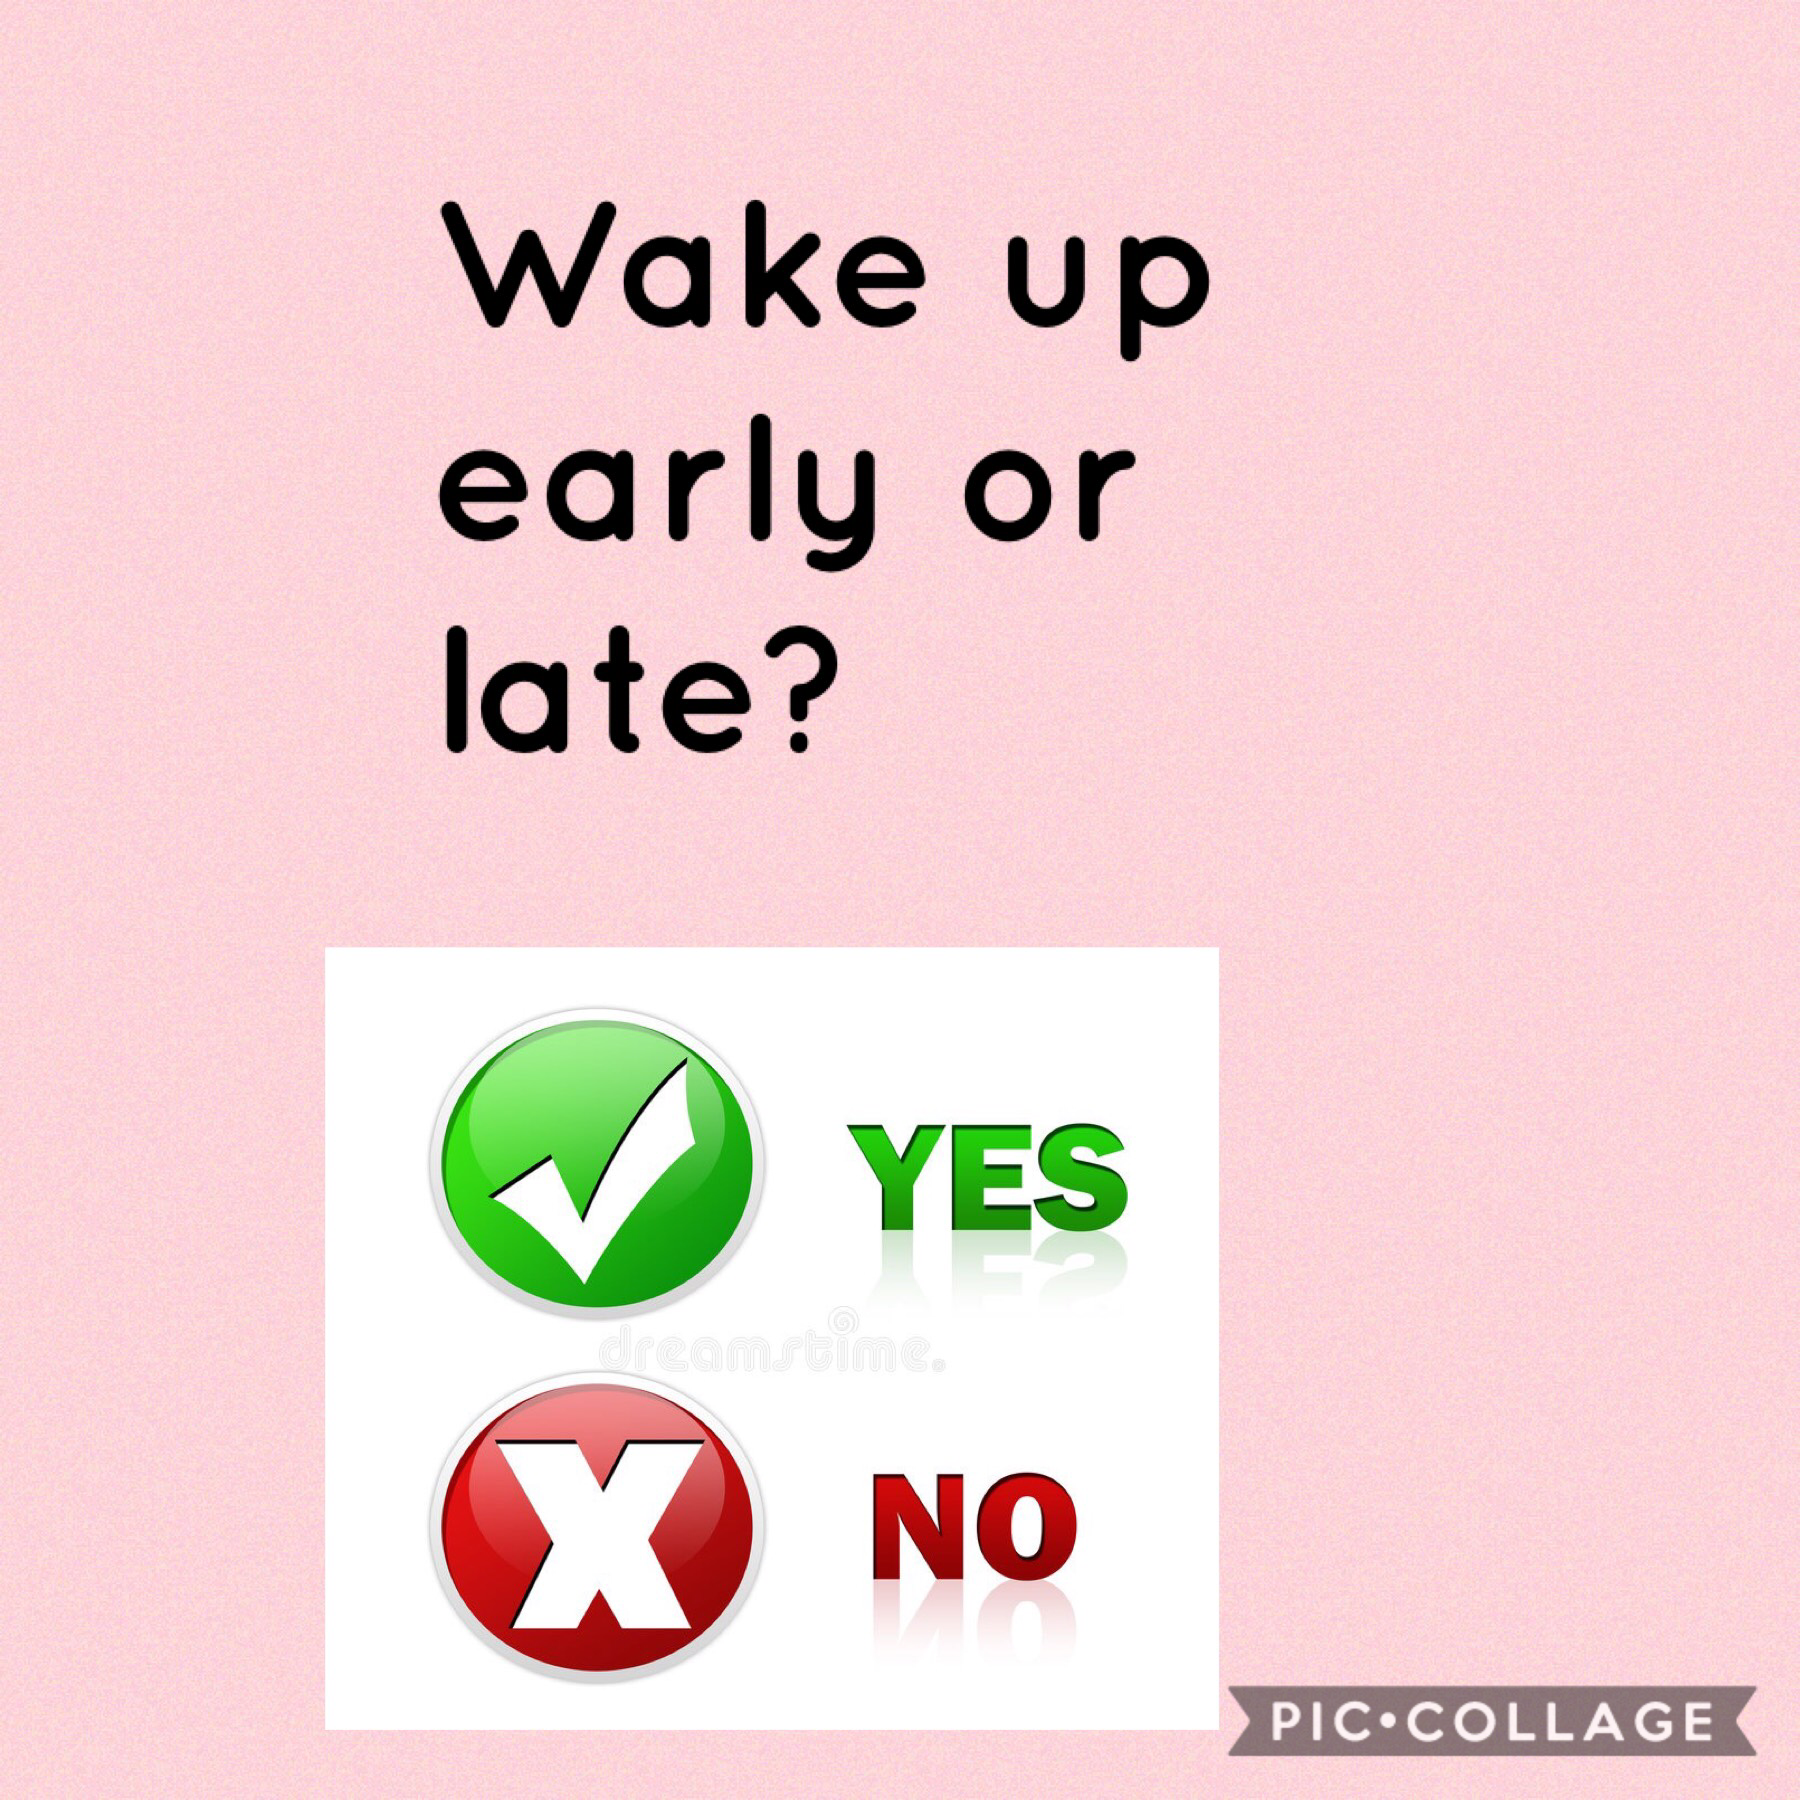 Should I wake up early or late I really hope you pick early! 